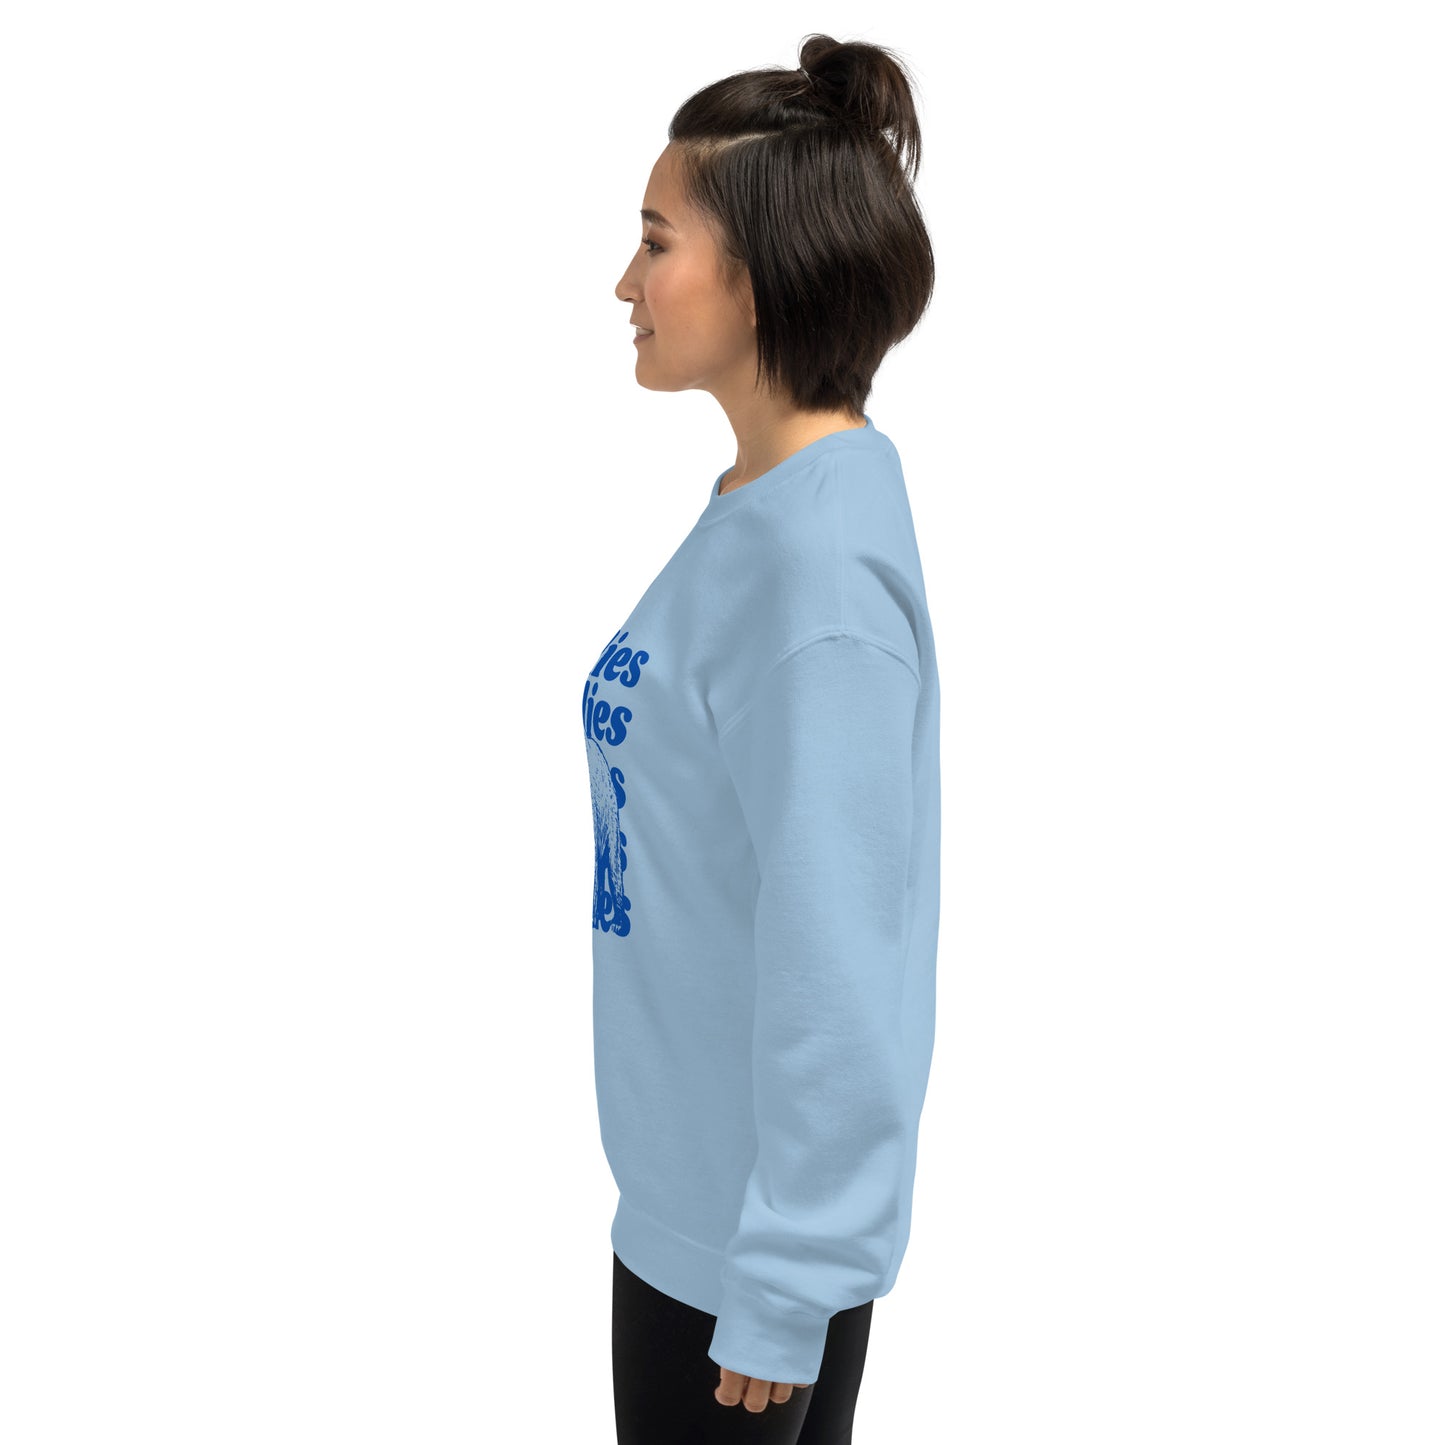 Royal Blue “Grizzlies” Adult Crew Neck Sweatshirt